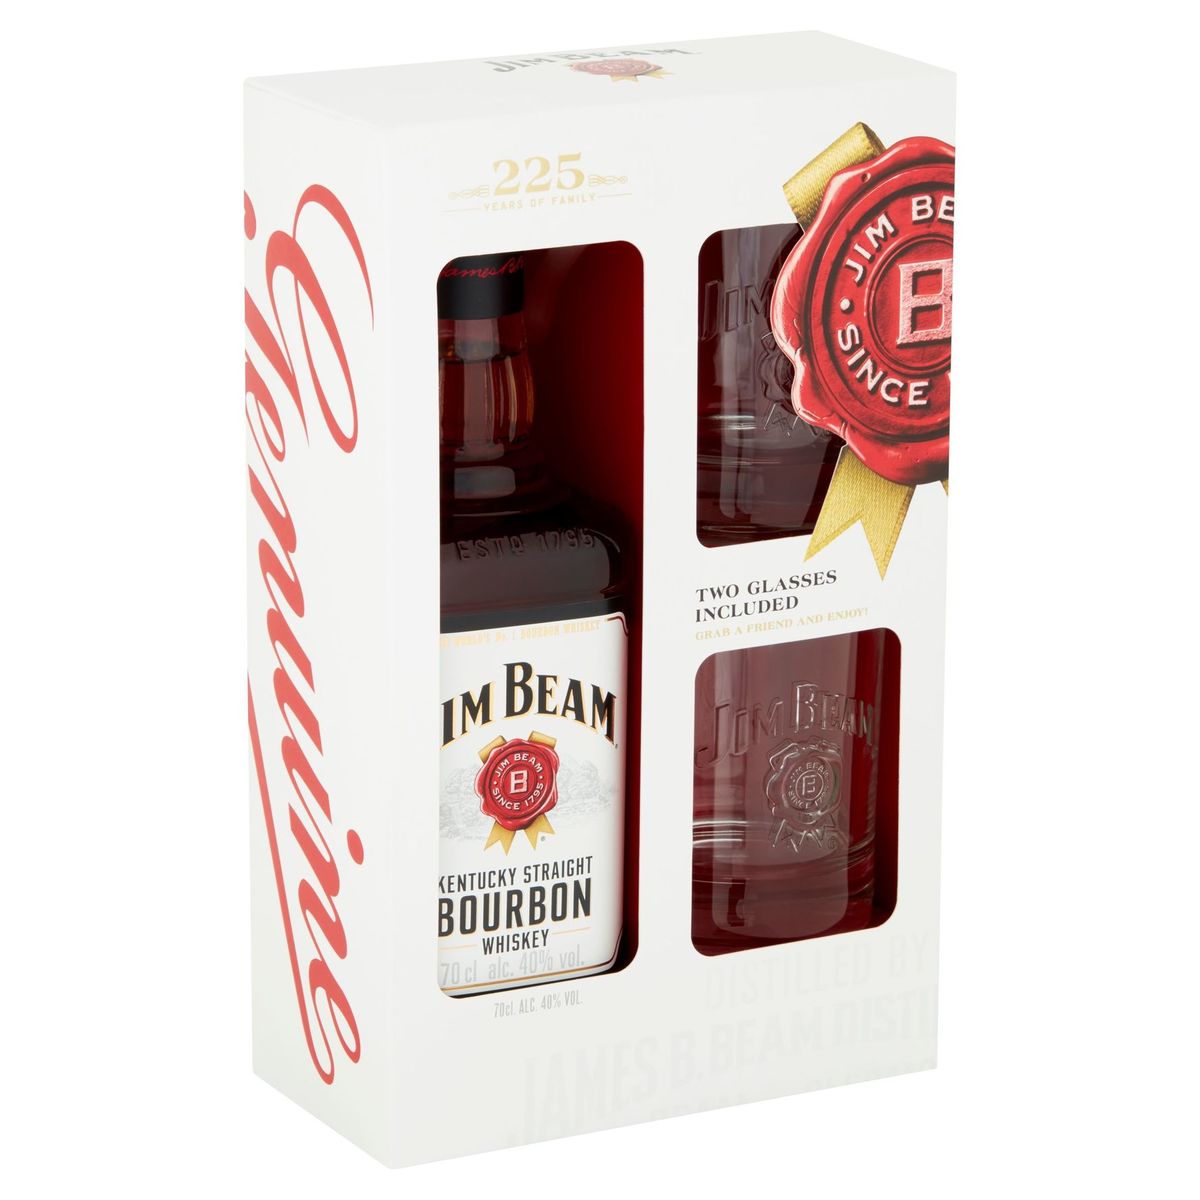 Jim Beam Kentucky Straight Bourbon Whiskey 70 cl